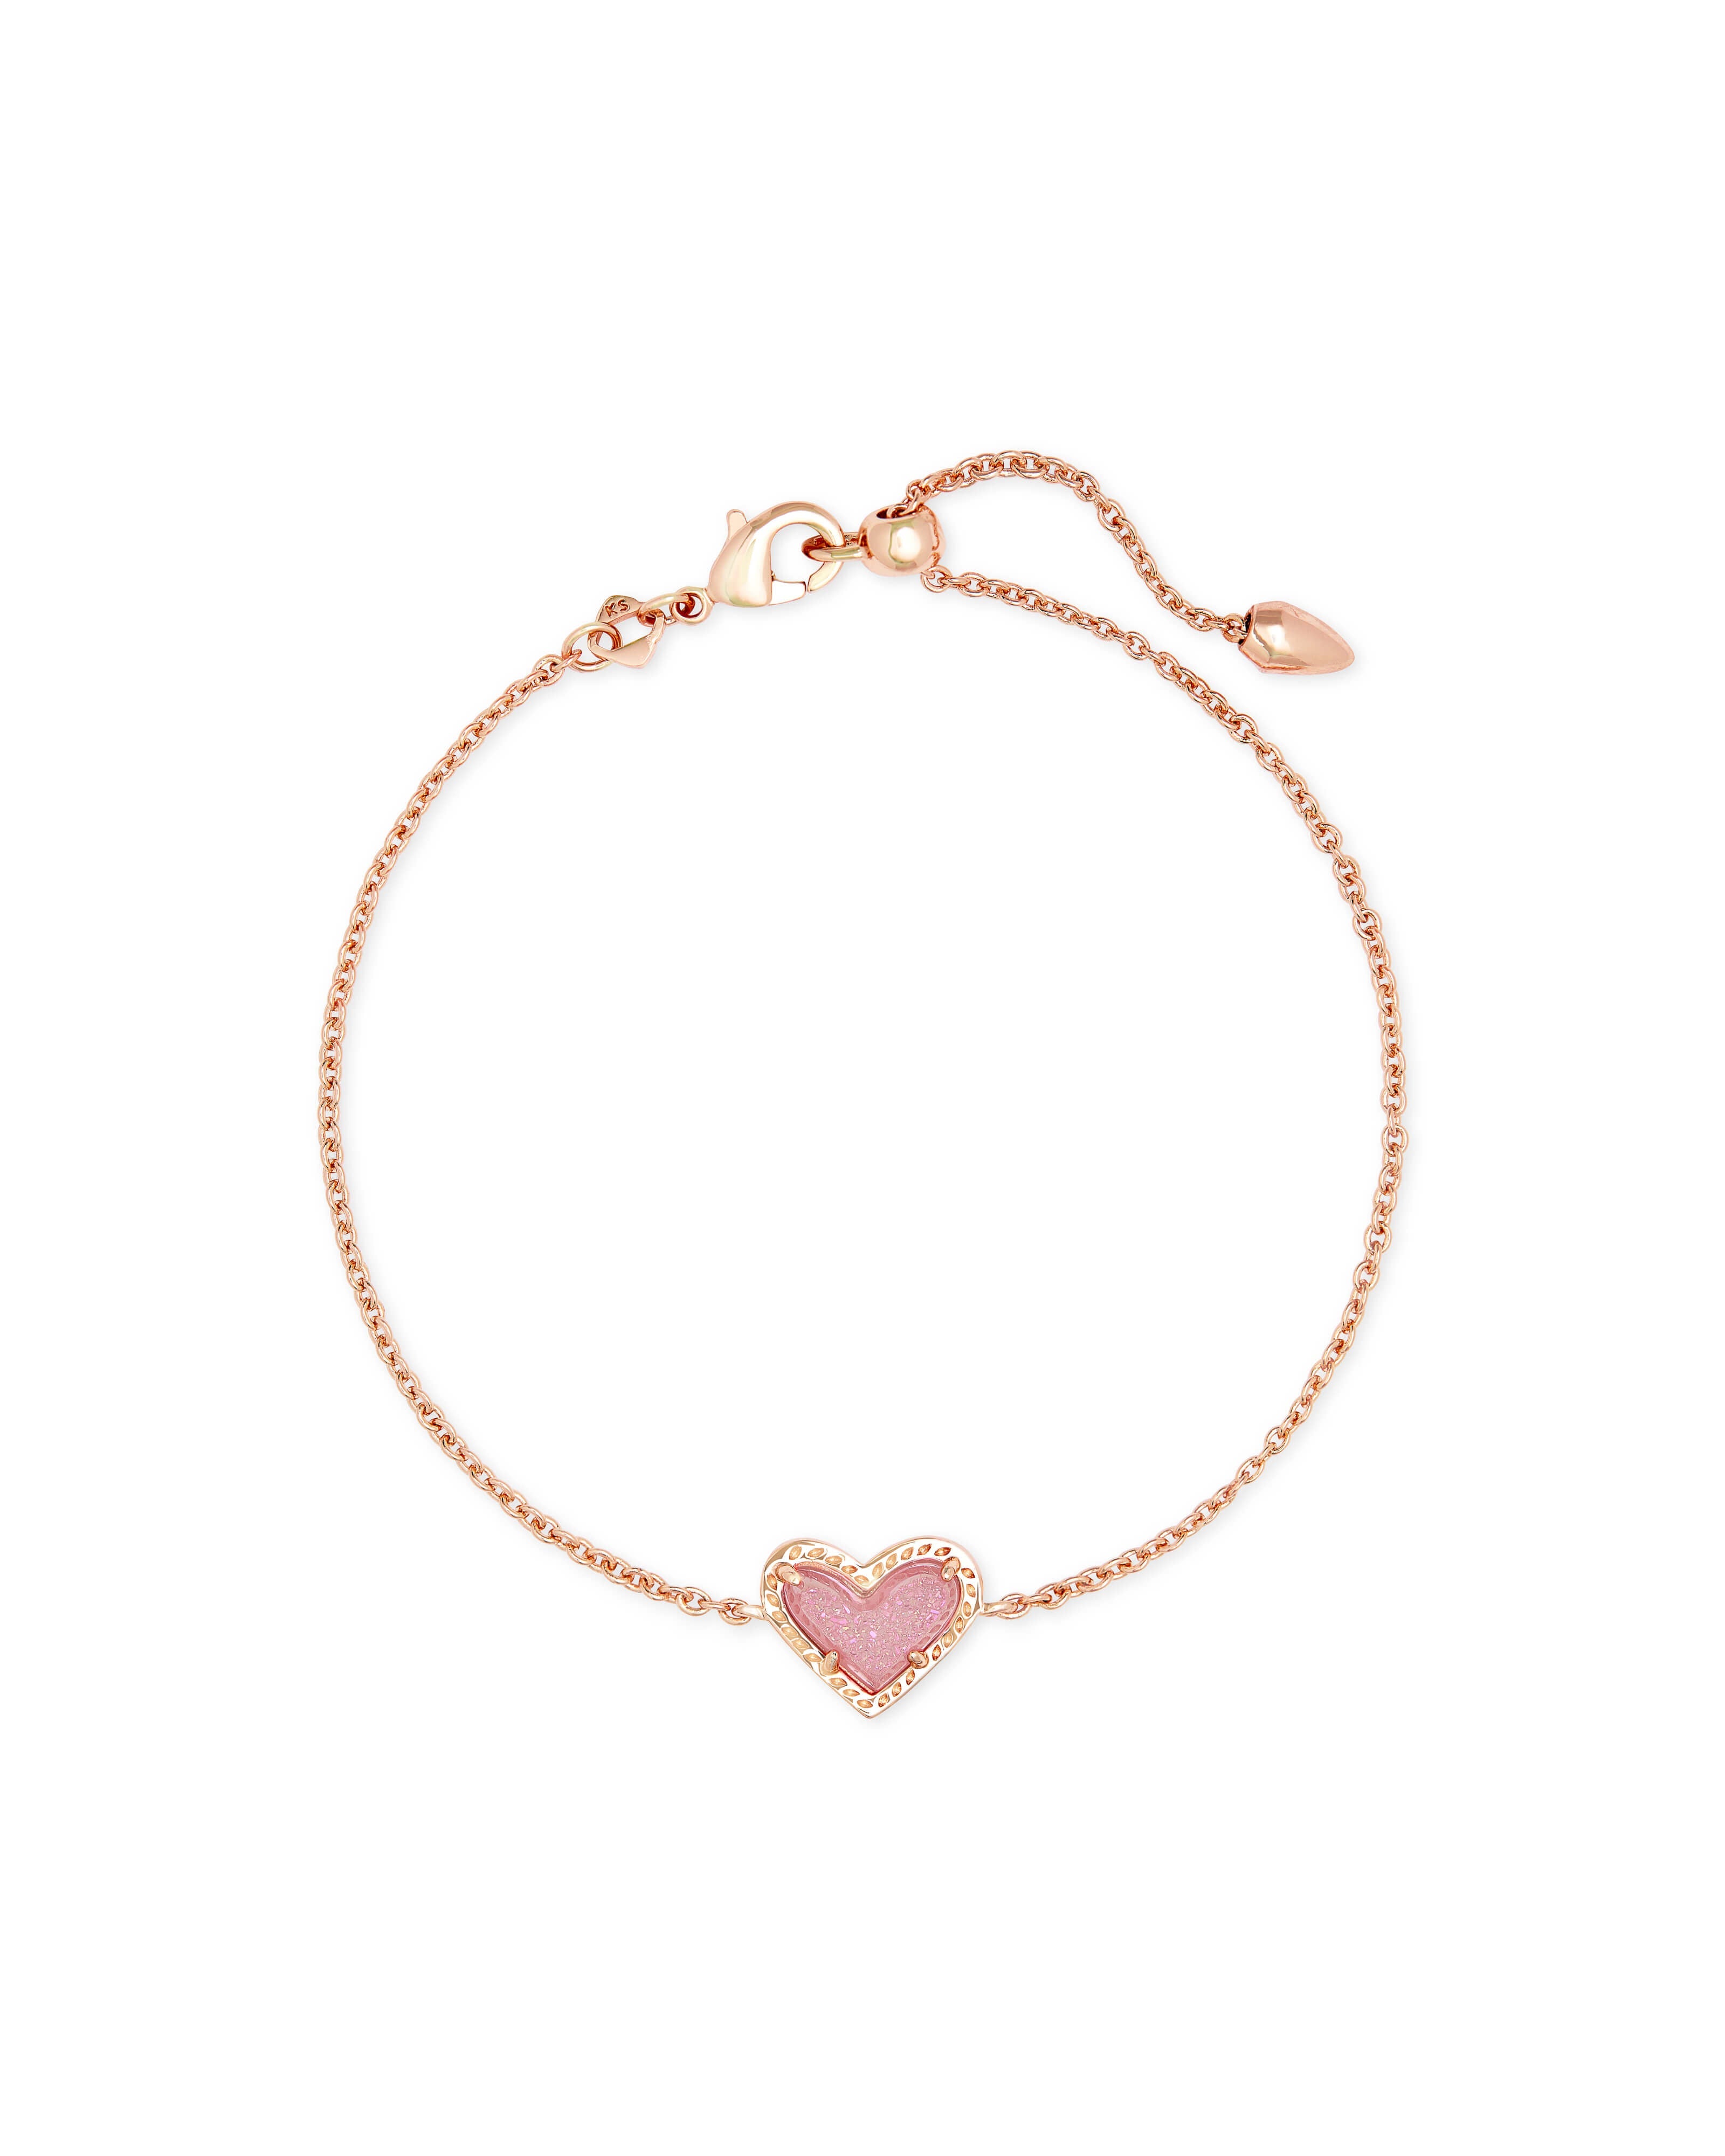 Ari Heart Drusy Bracelet - New Colors